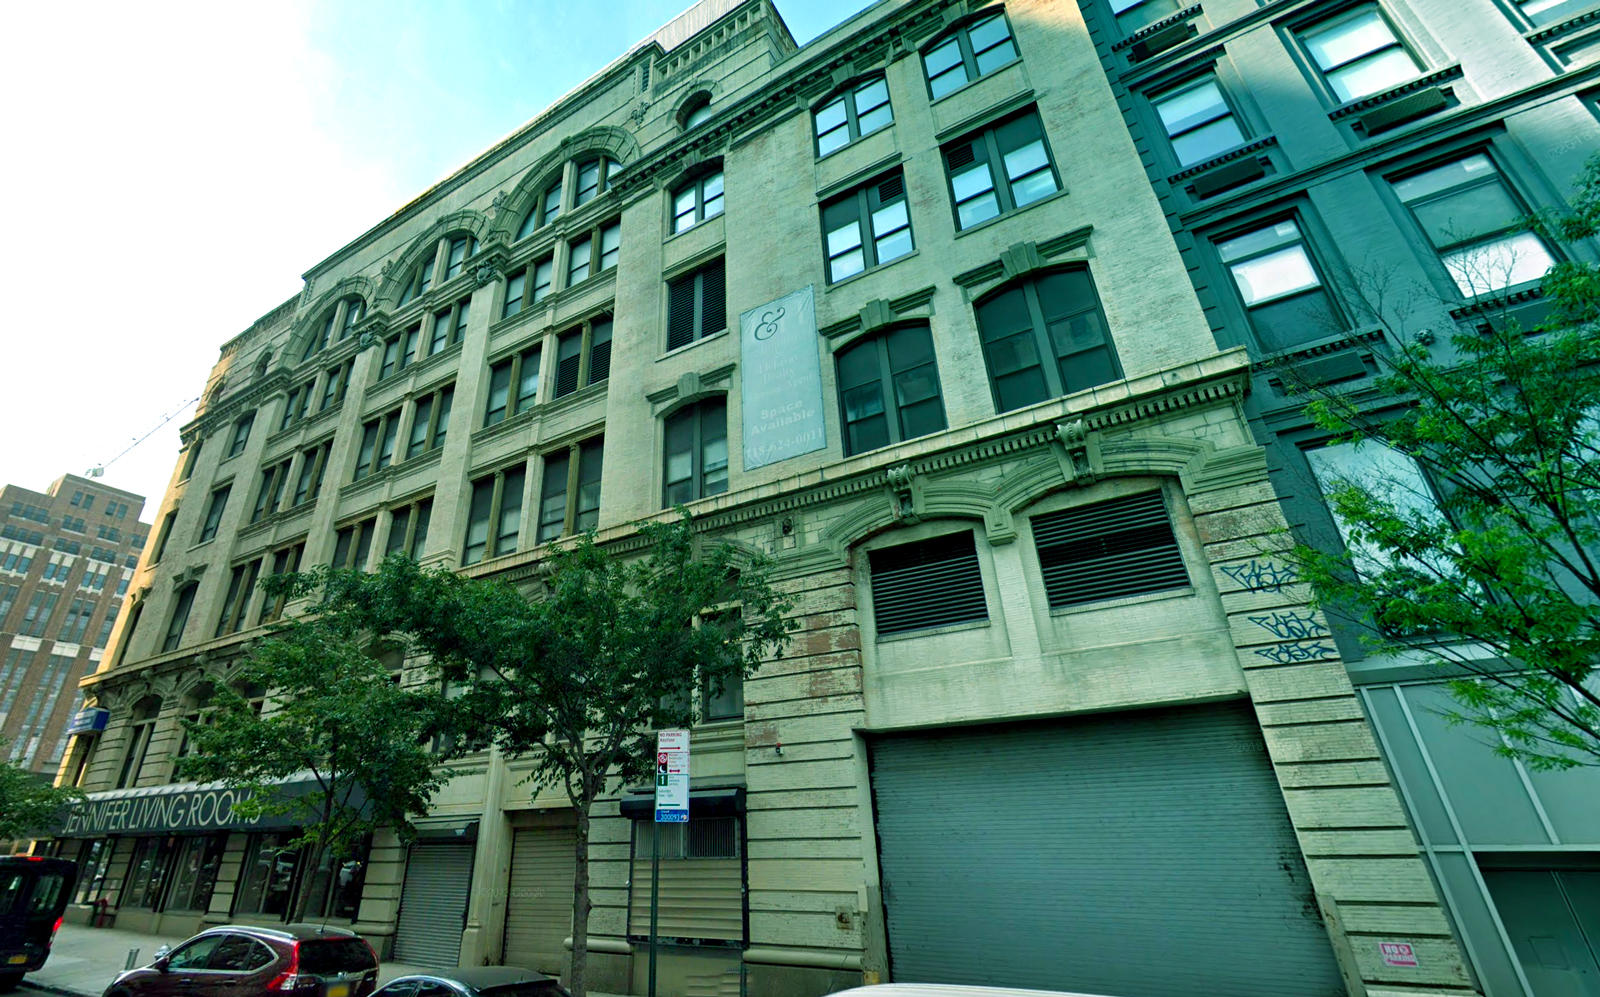 25 Elm Place in Brooklyn (Google Maps)